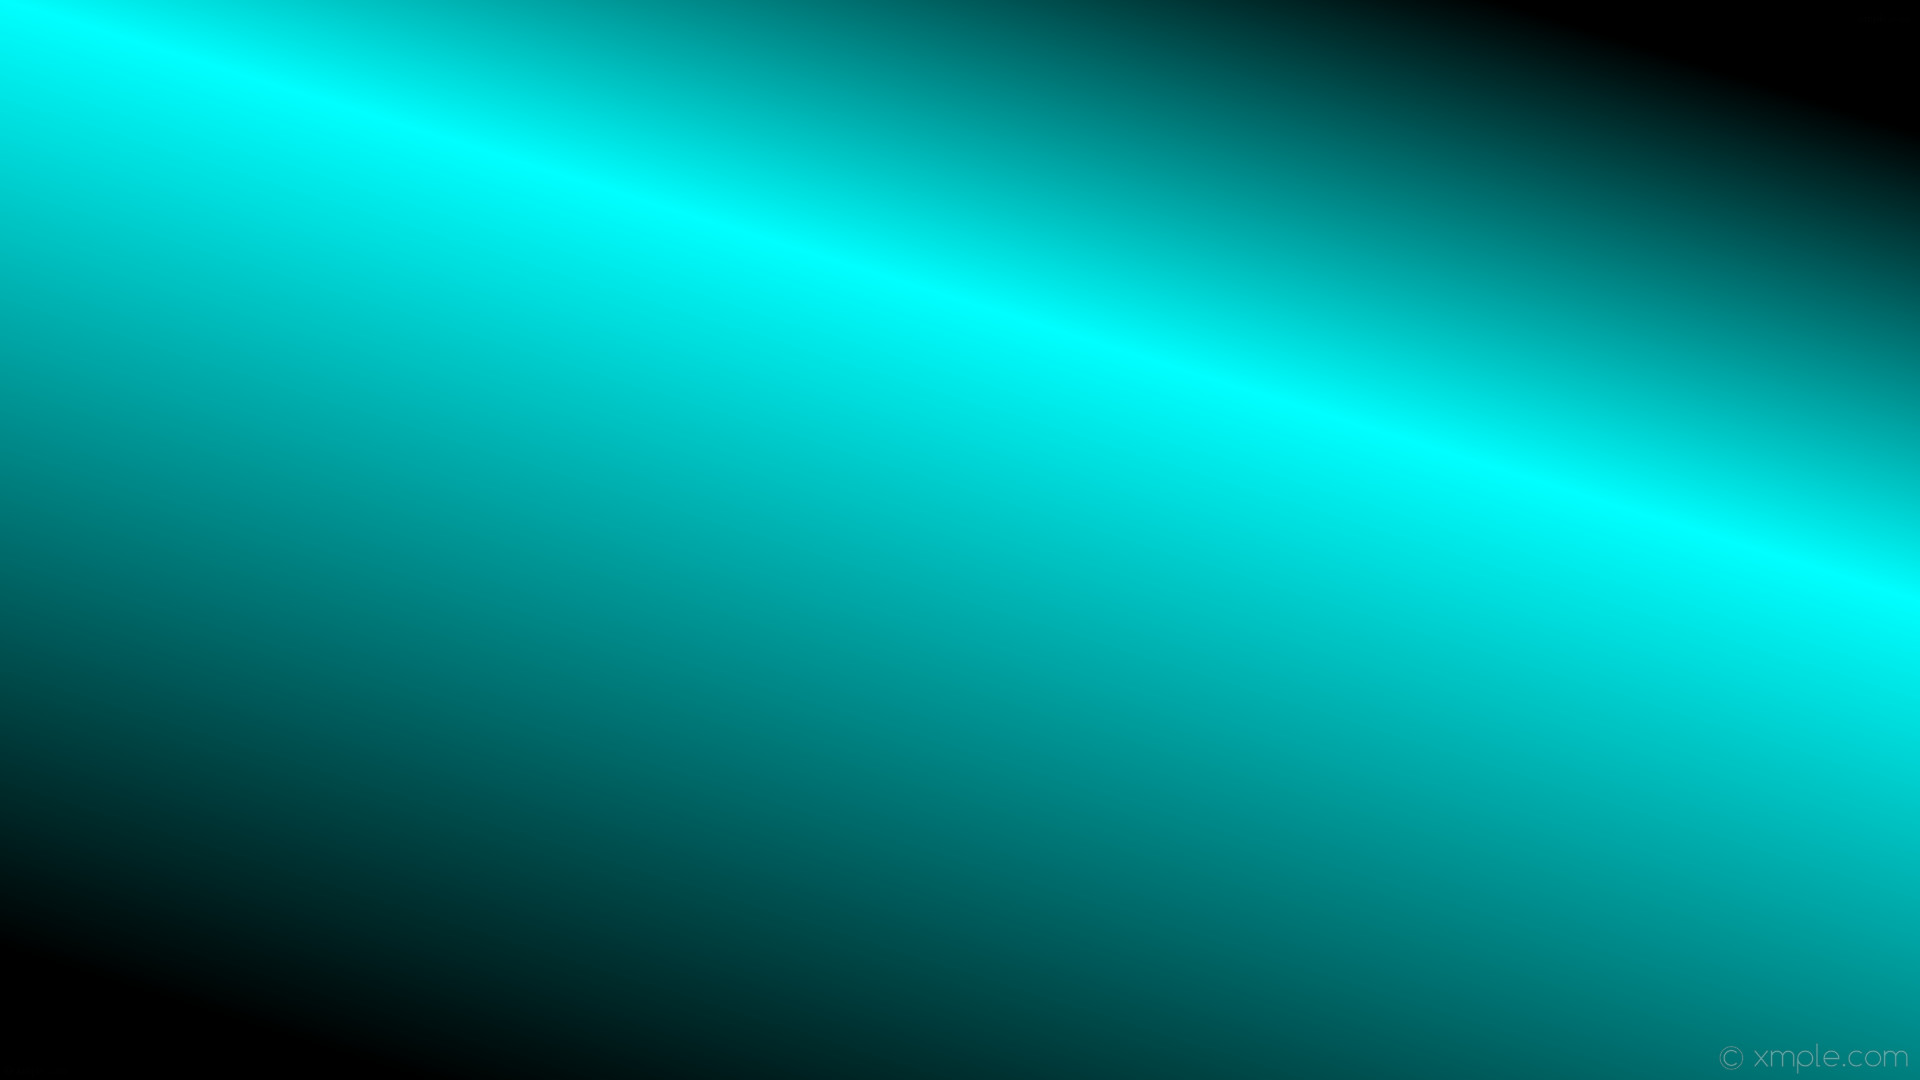 1920x1080 wallpaper linear highlight blue gradient black aqua cyan #000000 #00ffff  225Â° 67%